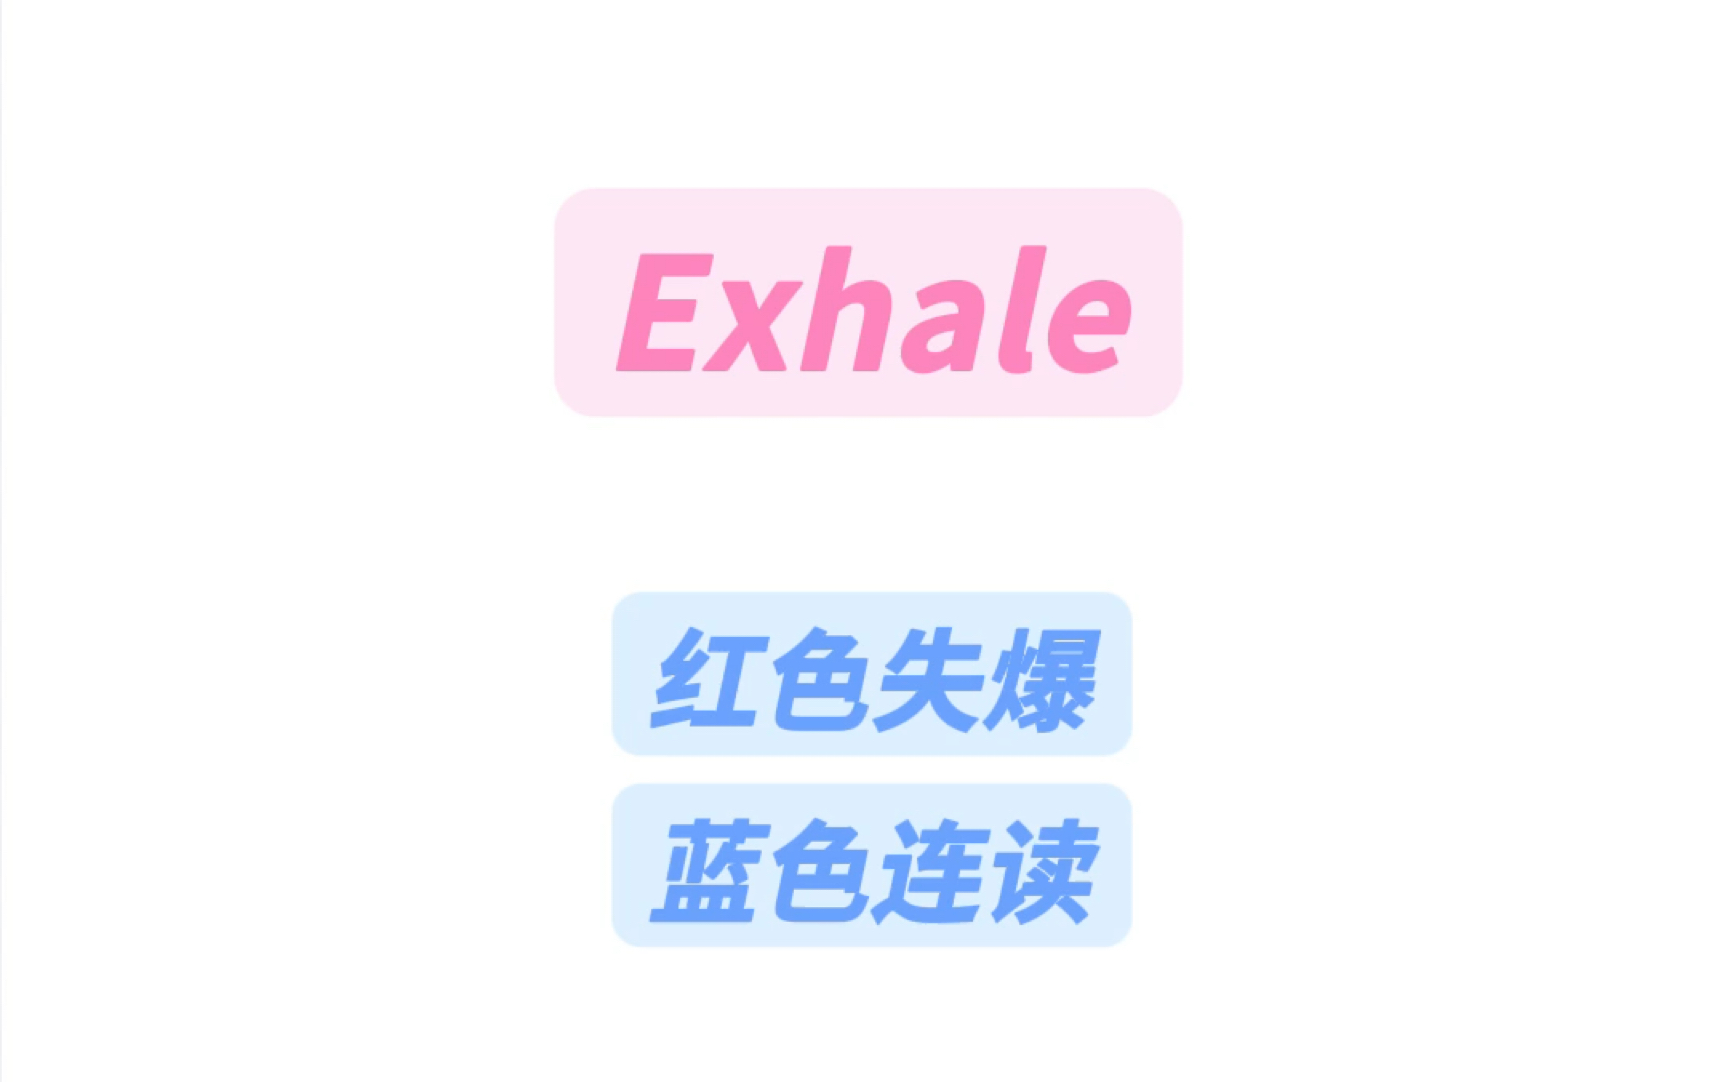 Exhale纯享版音译教学#简单易学的英文歌 #exhale翻唱  #exhale